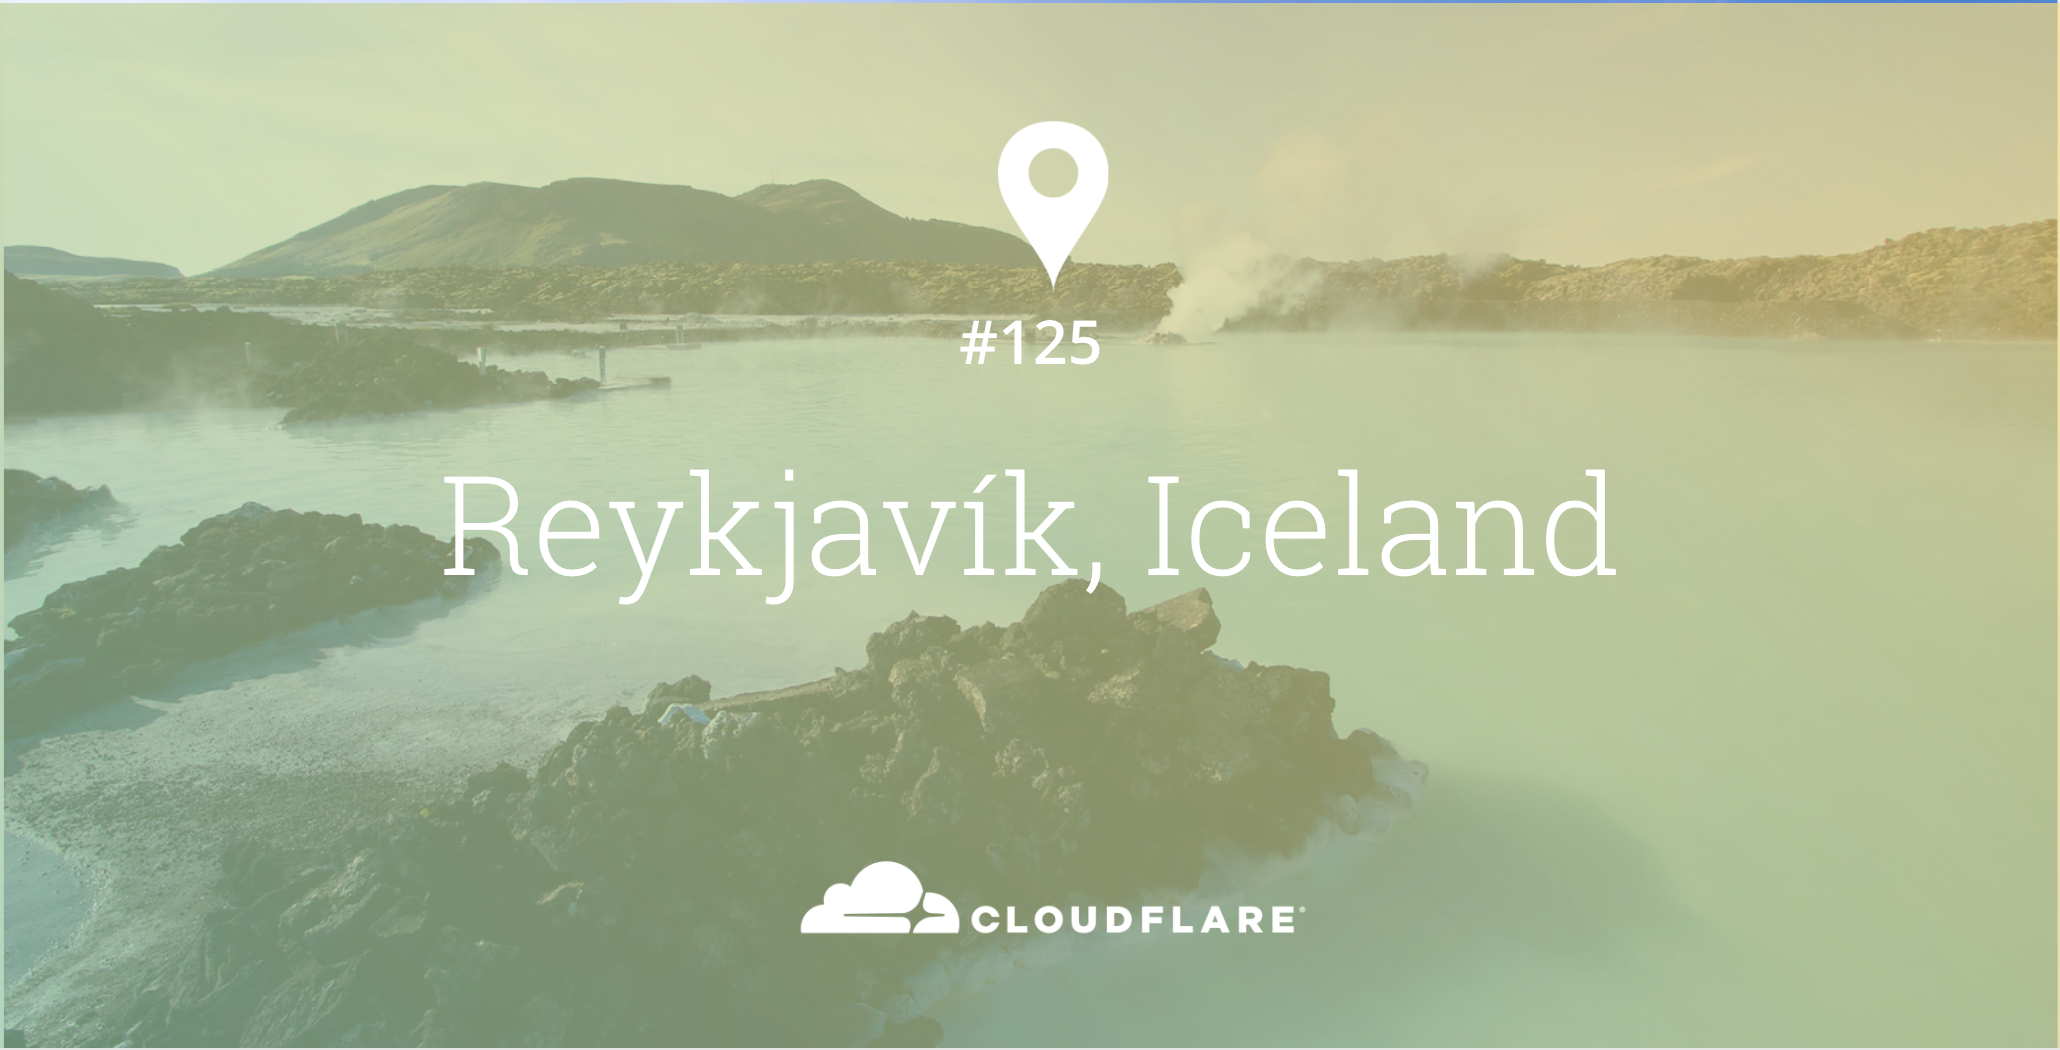 Reykjavík, Cloudflare’s northernmost location